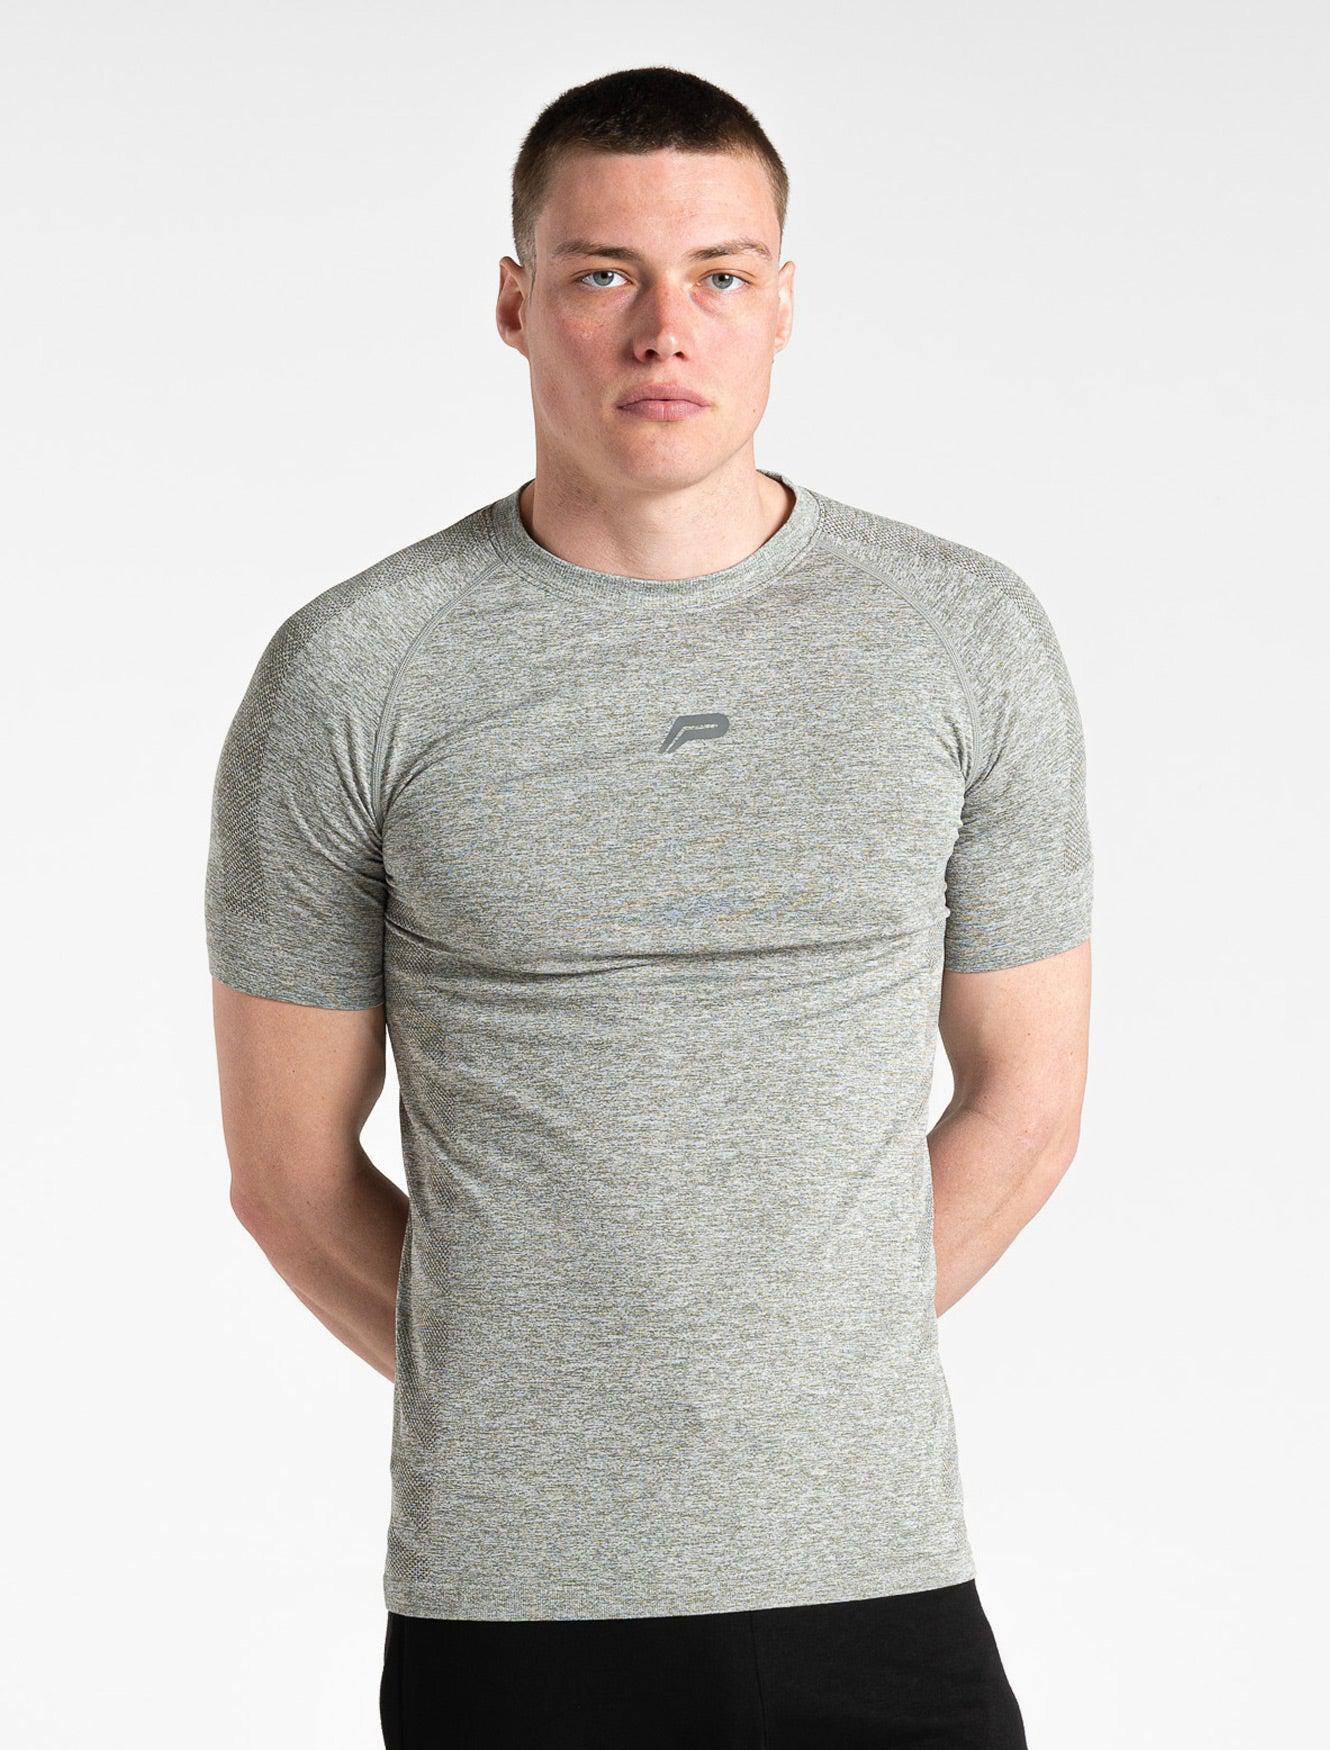 Intensity Seamless T-shirt / Khaki Marl Pursue Fitness 1